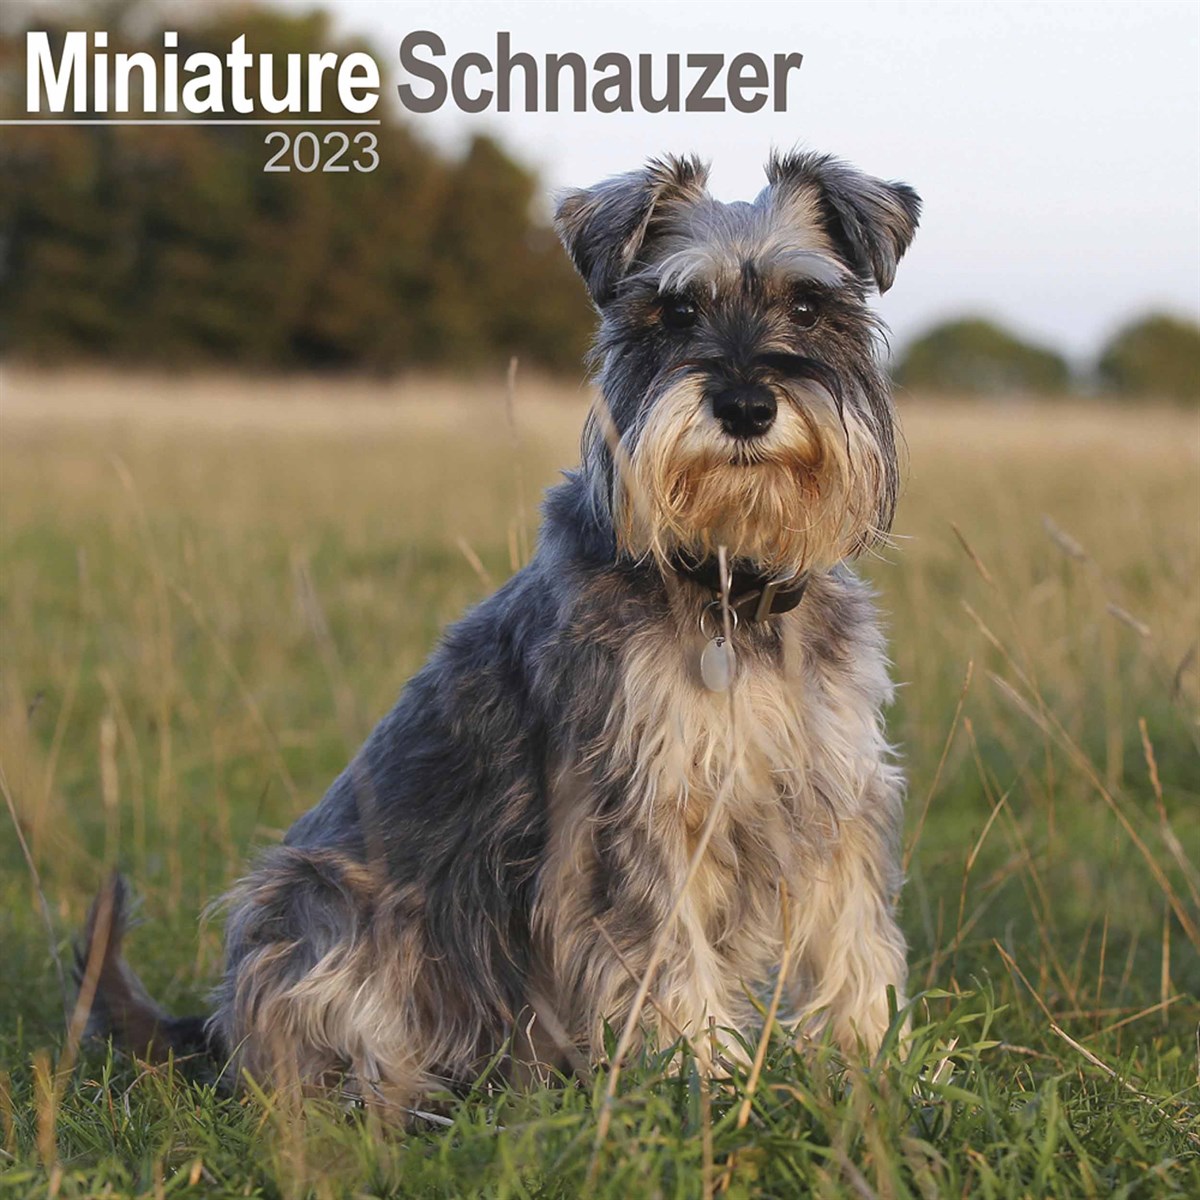 Miniature Schnauzer 2023 Calendars